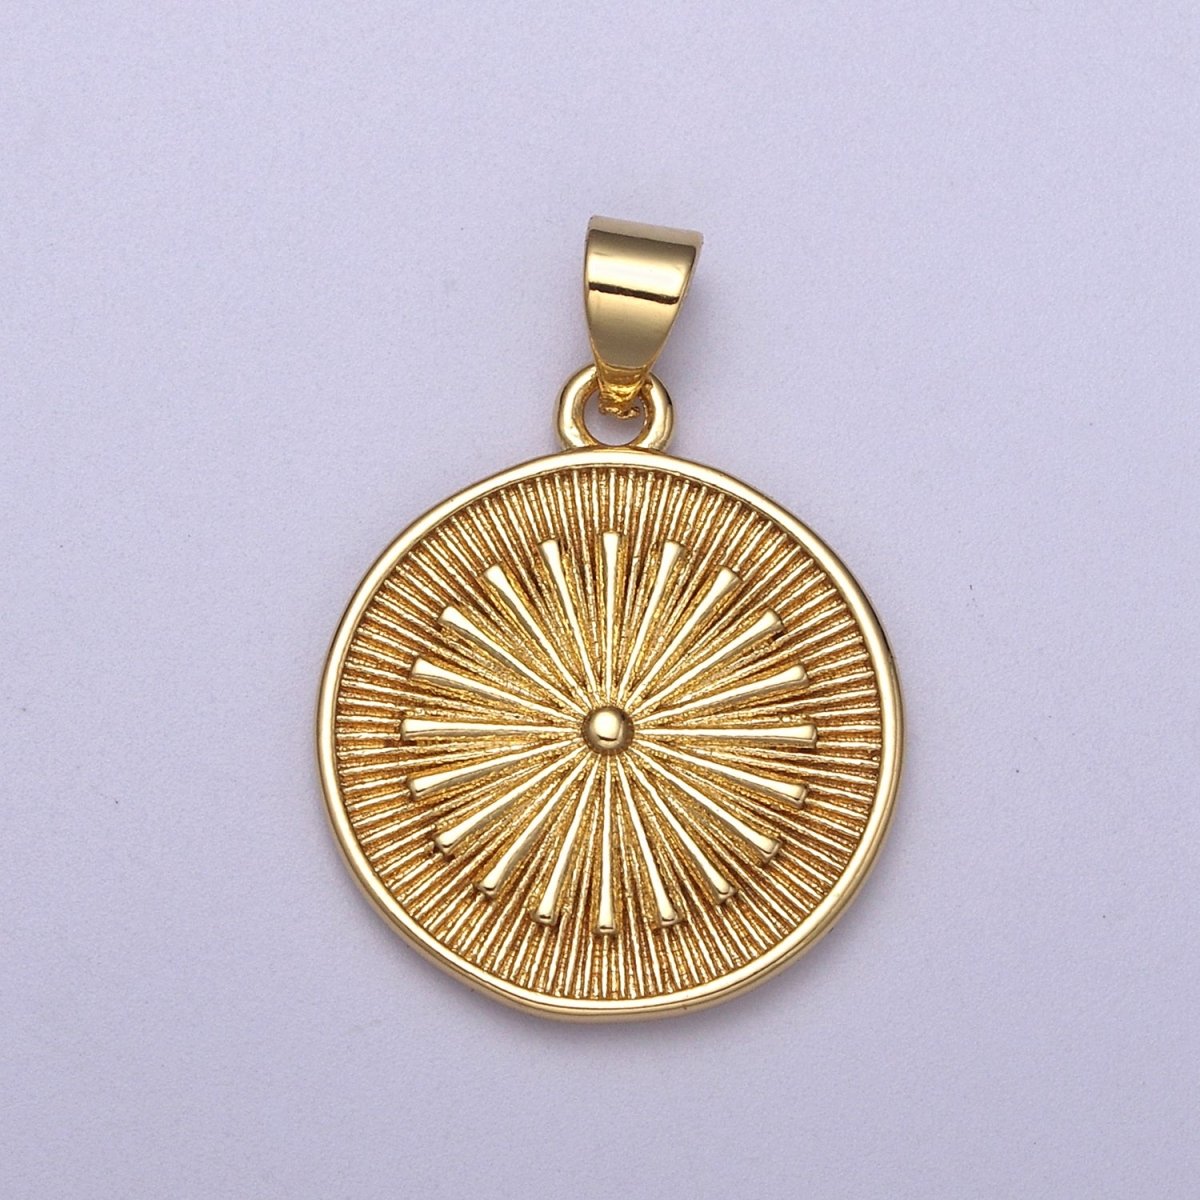 24k Gold Filled Round Coin Medallion Pendant, Sunburst Charm Necklace, Geometric Celestial Jewelry Supply H-393 - DLUXCA